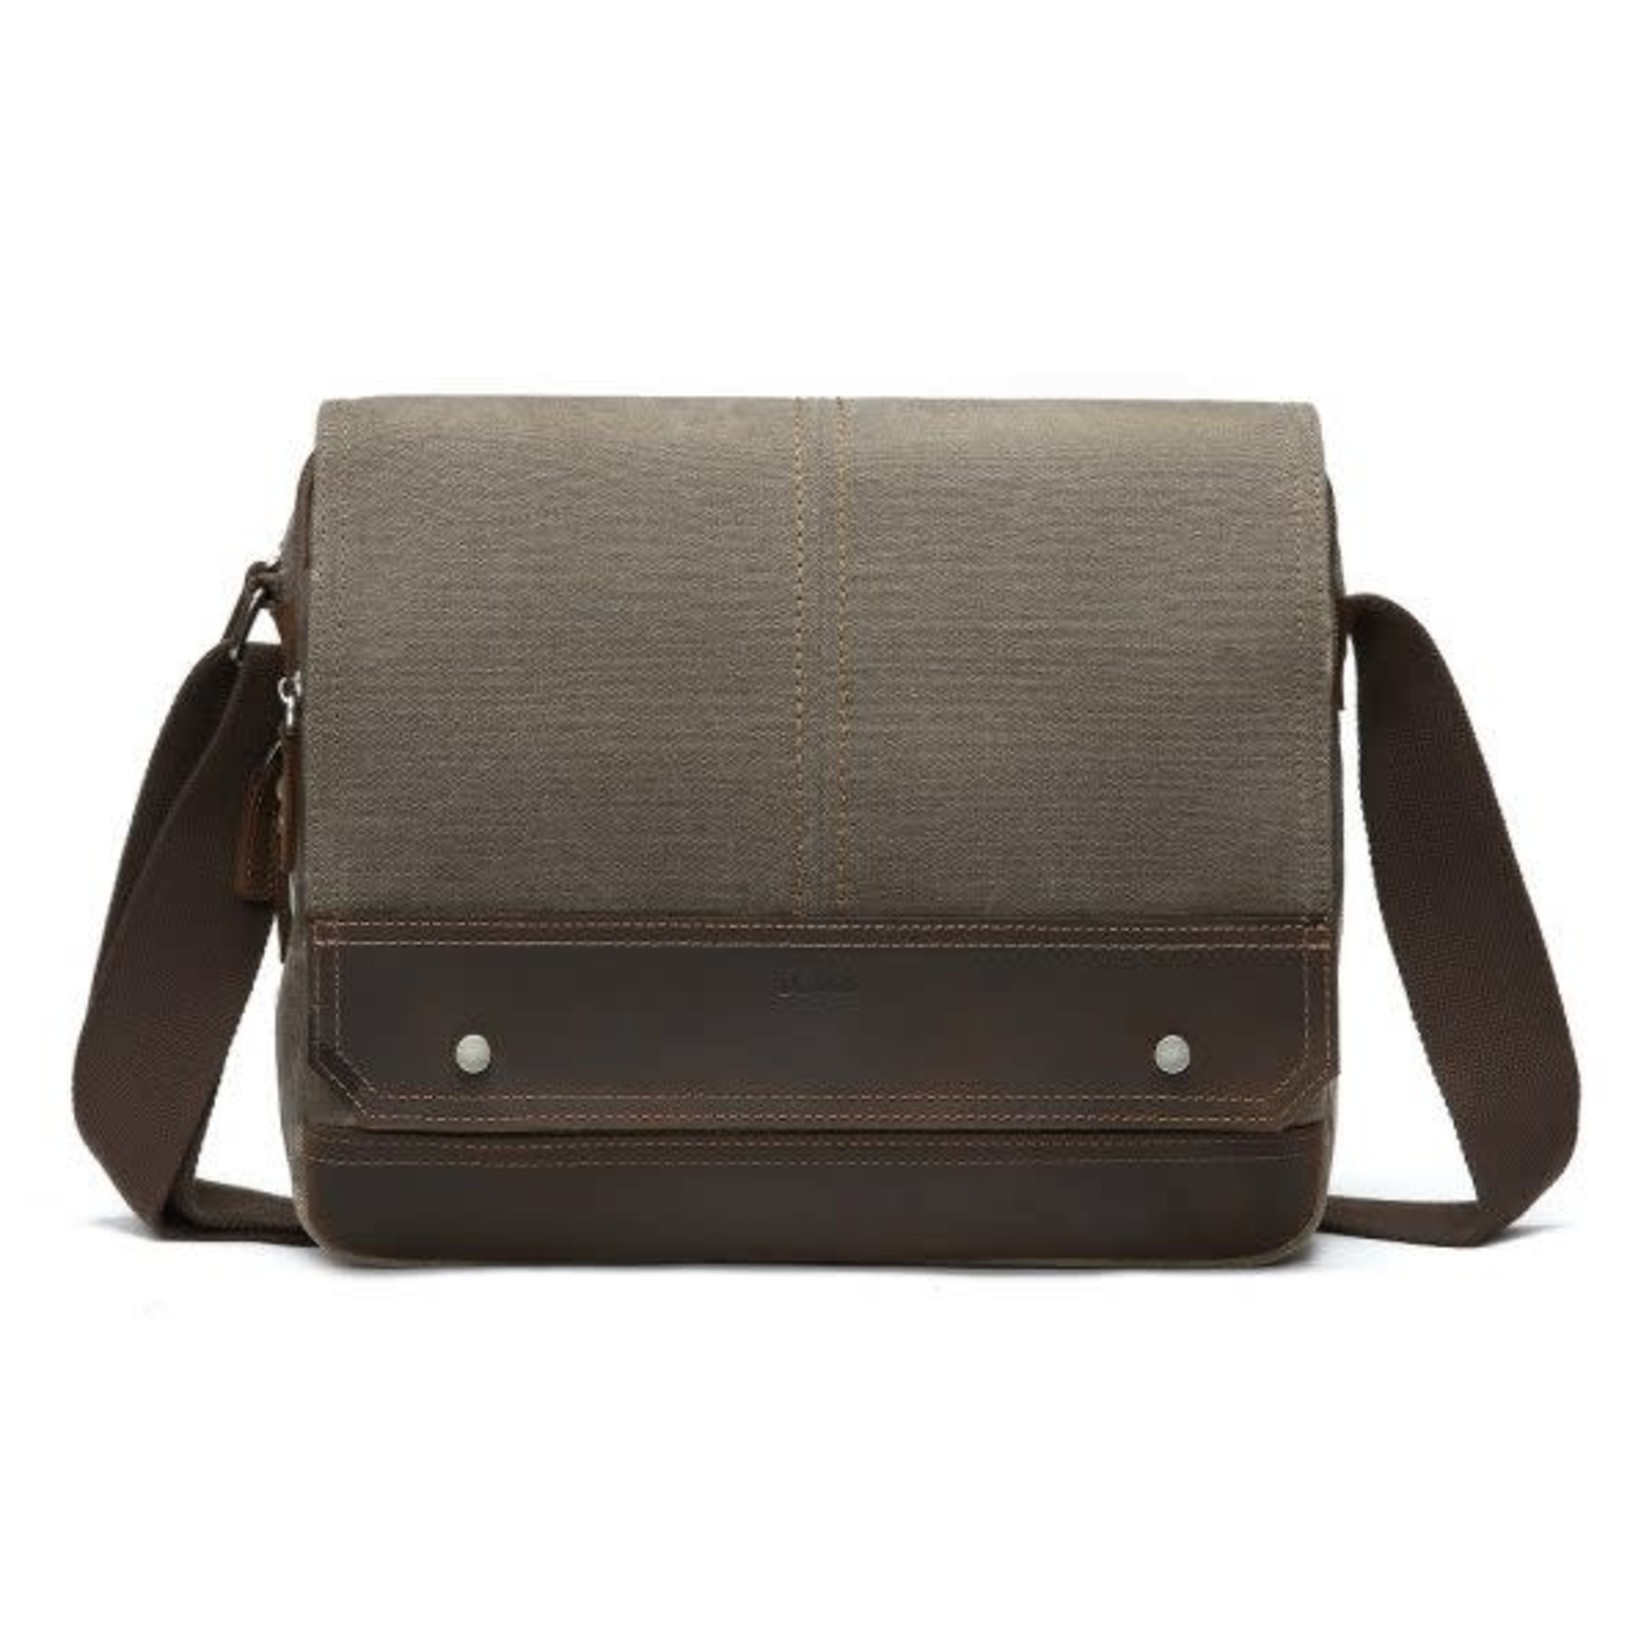 Davan Designs Messenger Bag Brown Canvas w Flap & Leather Trim